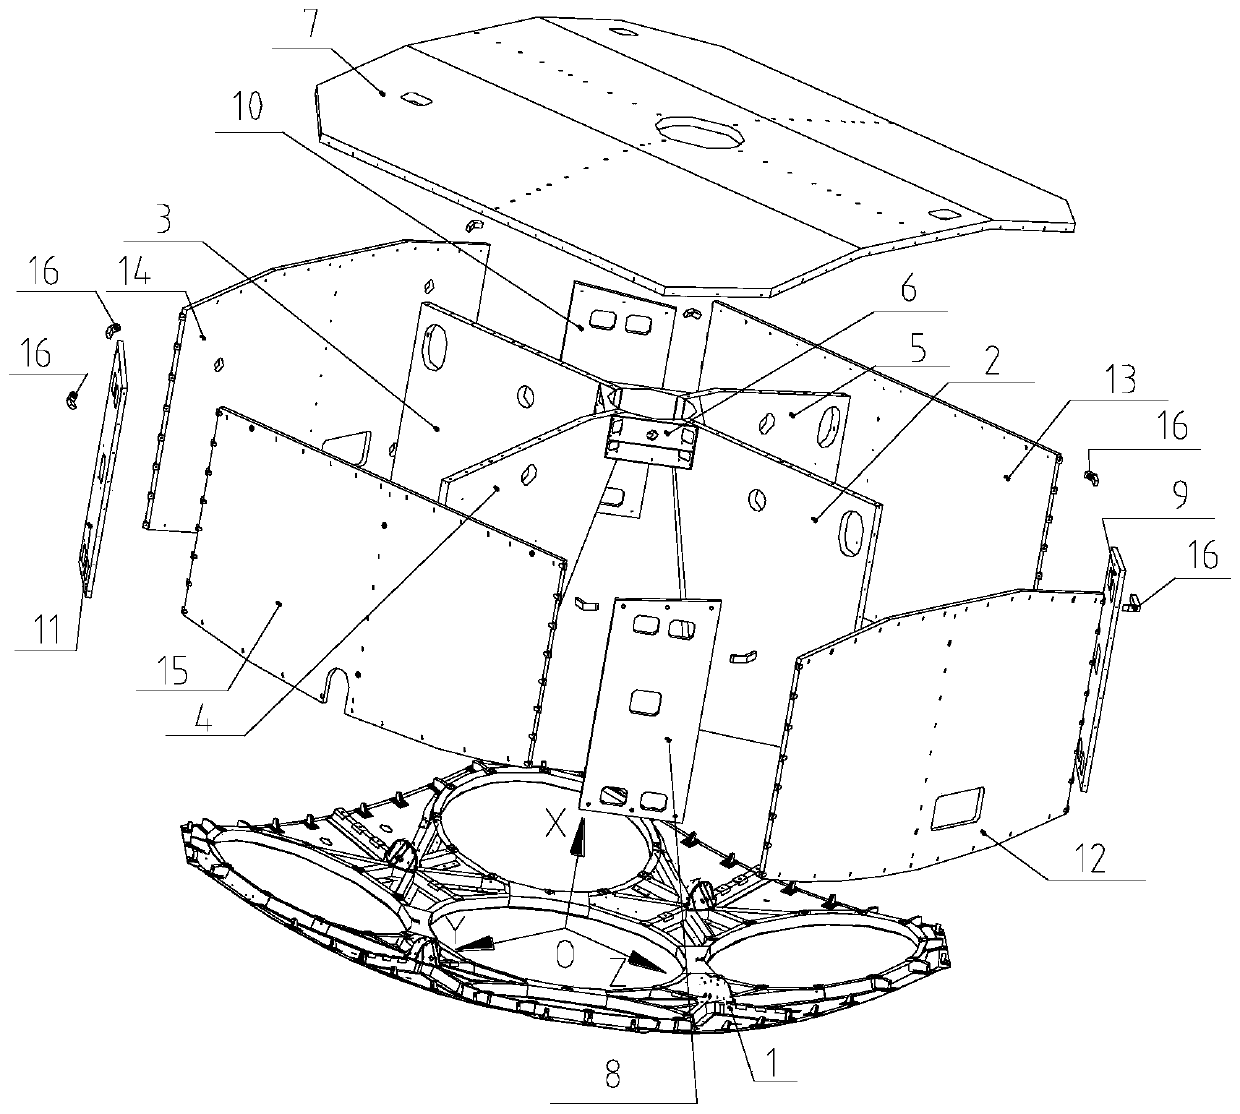 A lightweight spacecraft main structure